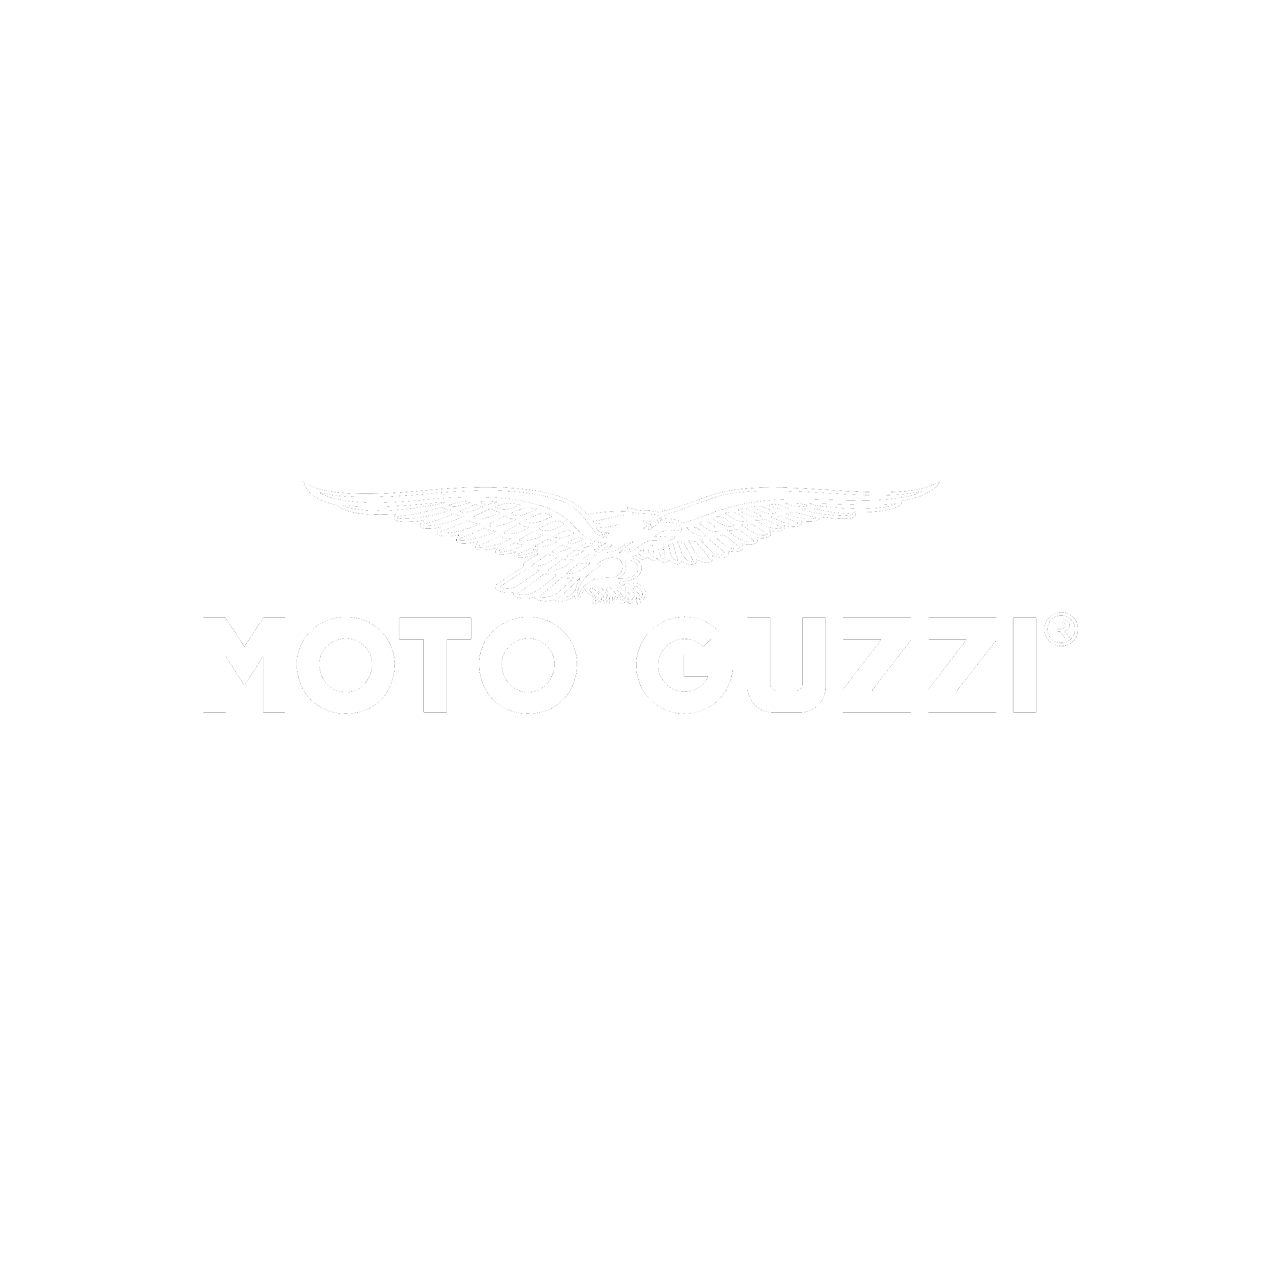 Moto Guzzi : Brand Short Description Type Here.